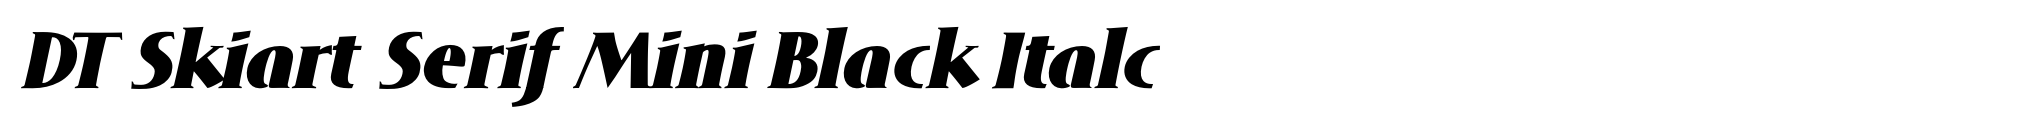 DT Skiart Serif Mini Black Italc image